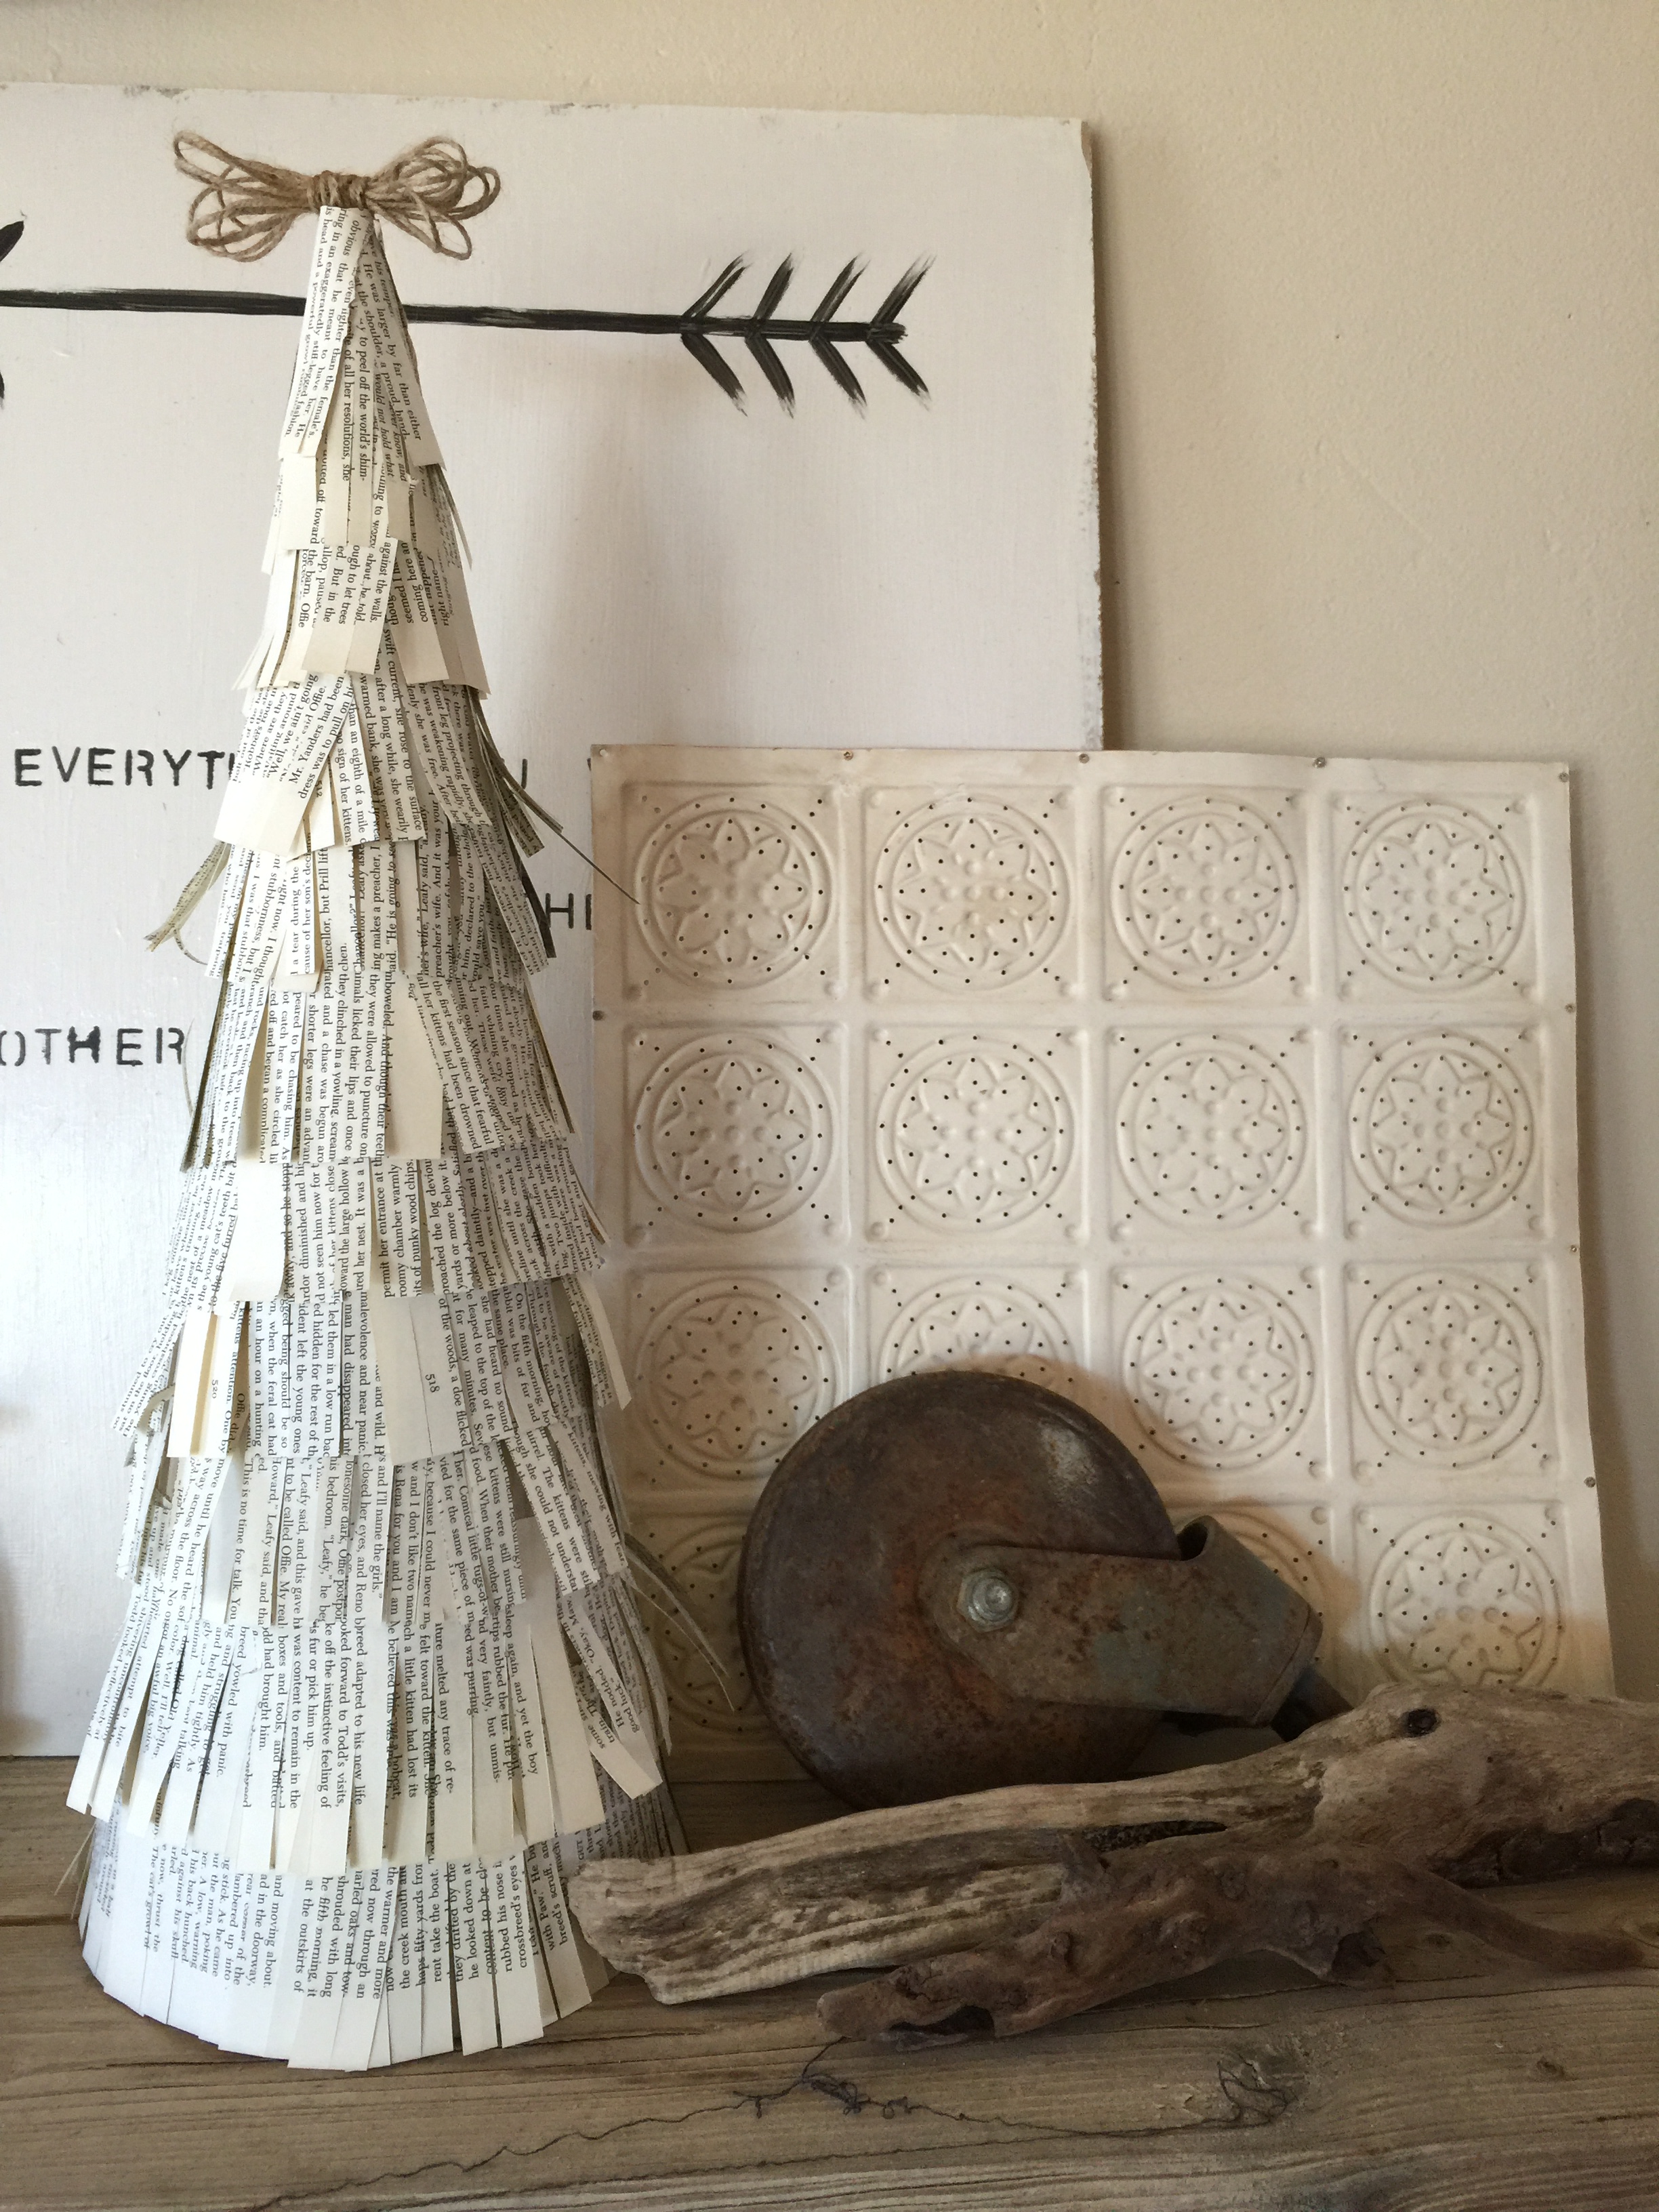 DIY Book Christmas Tree